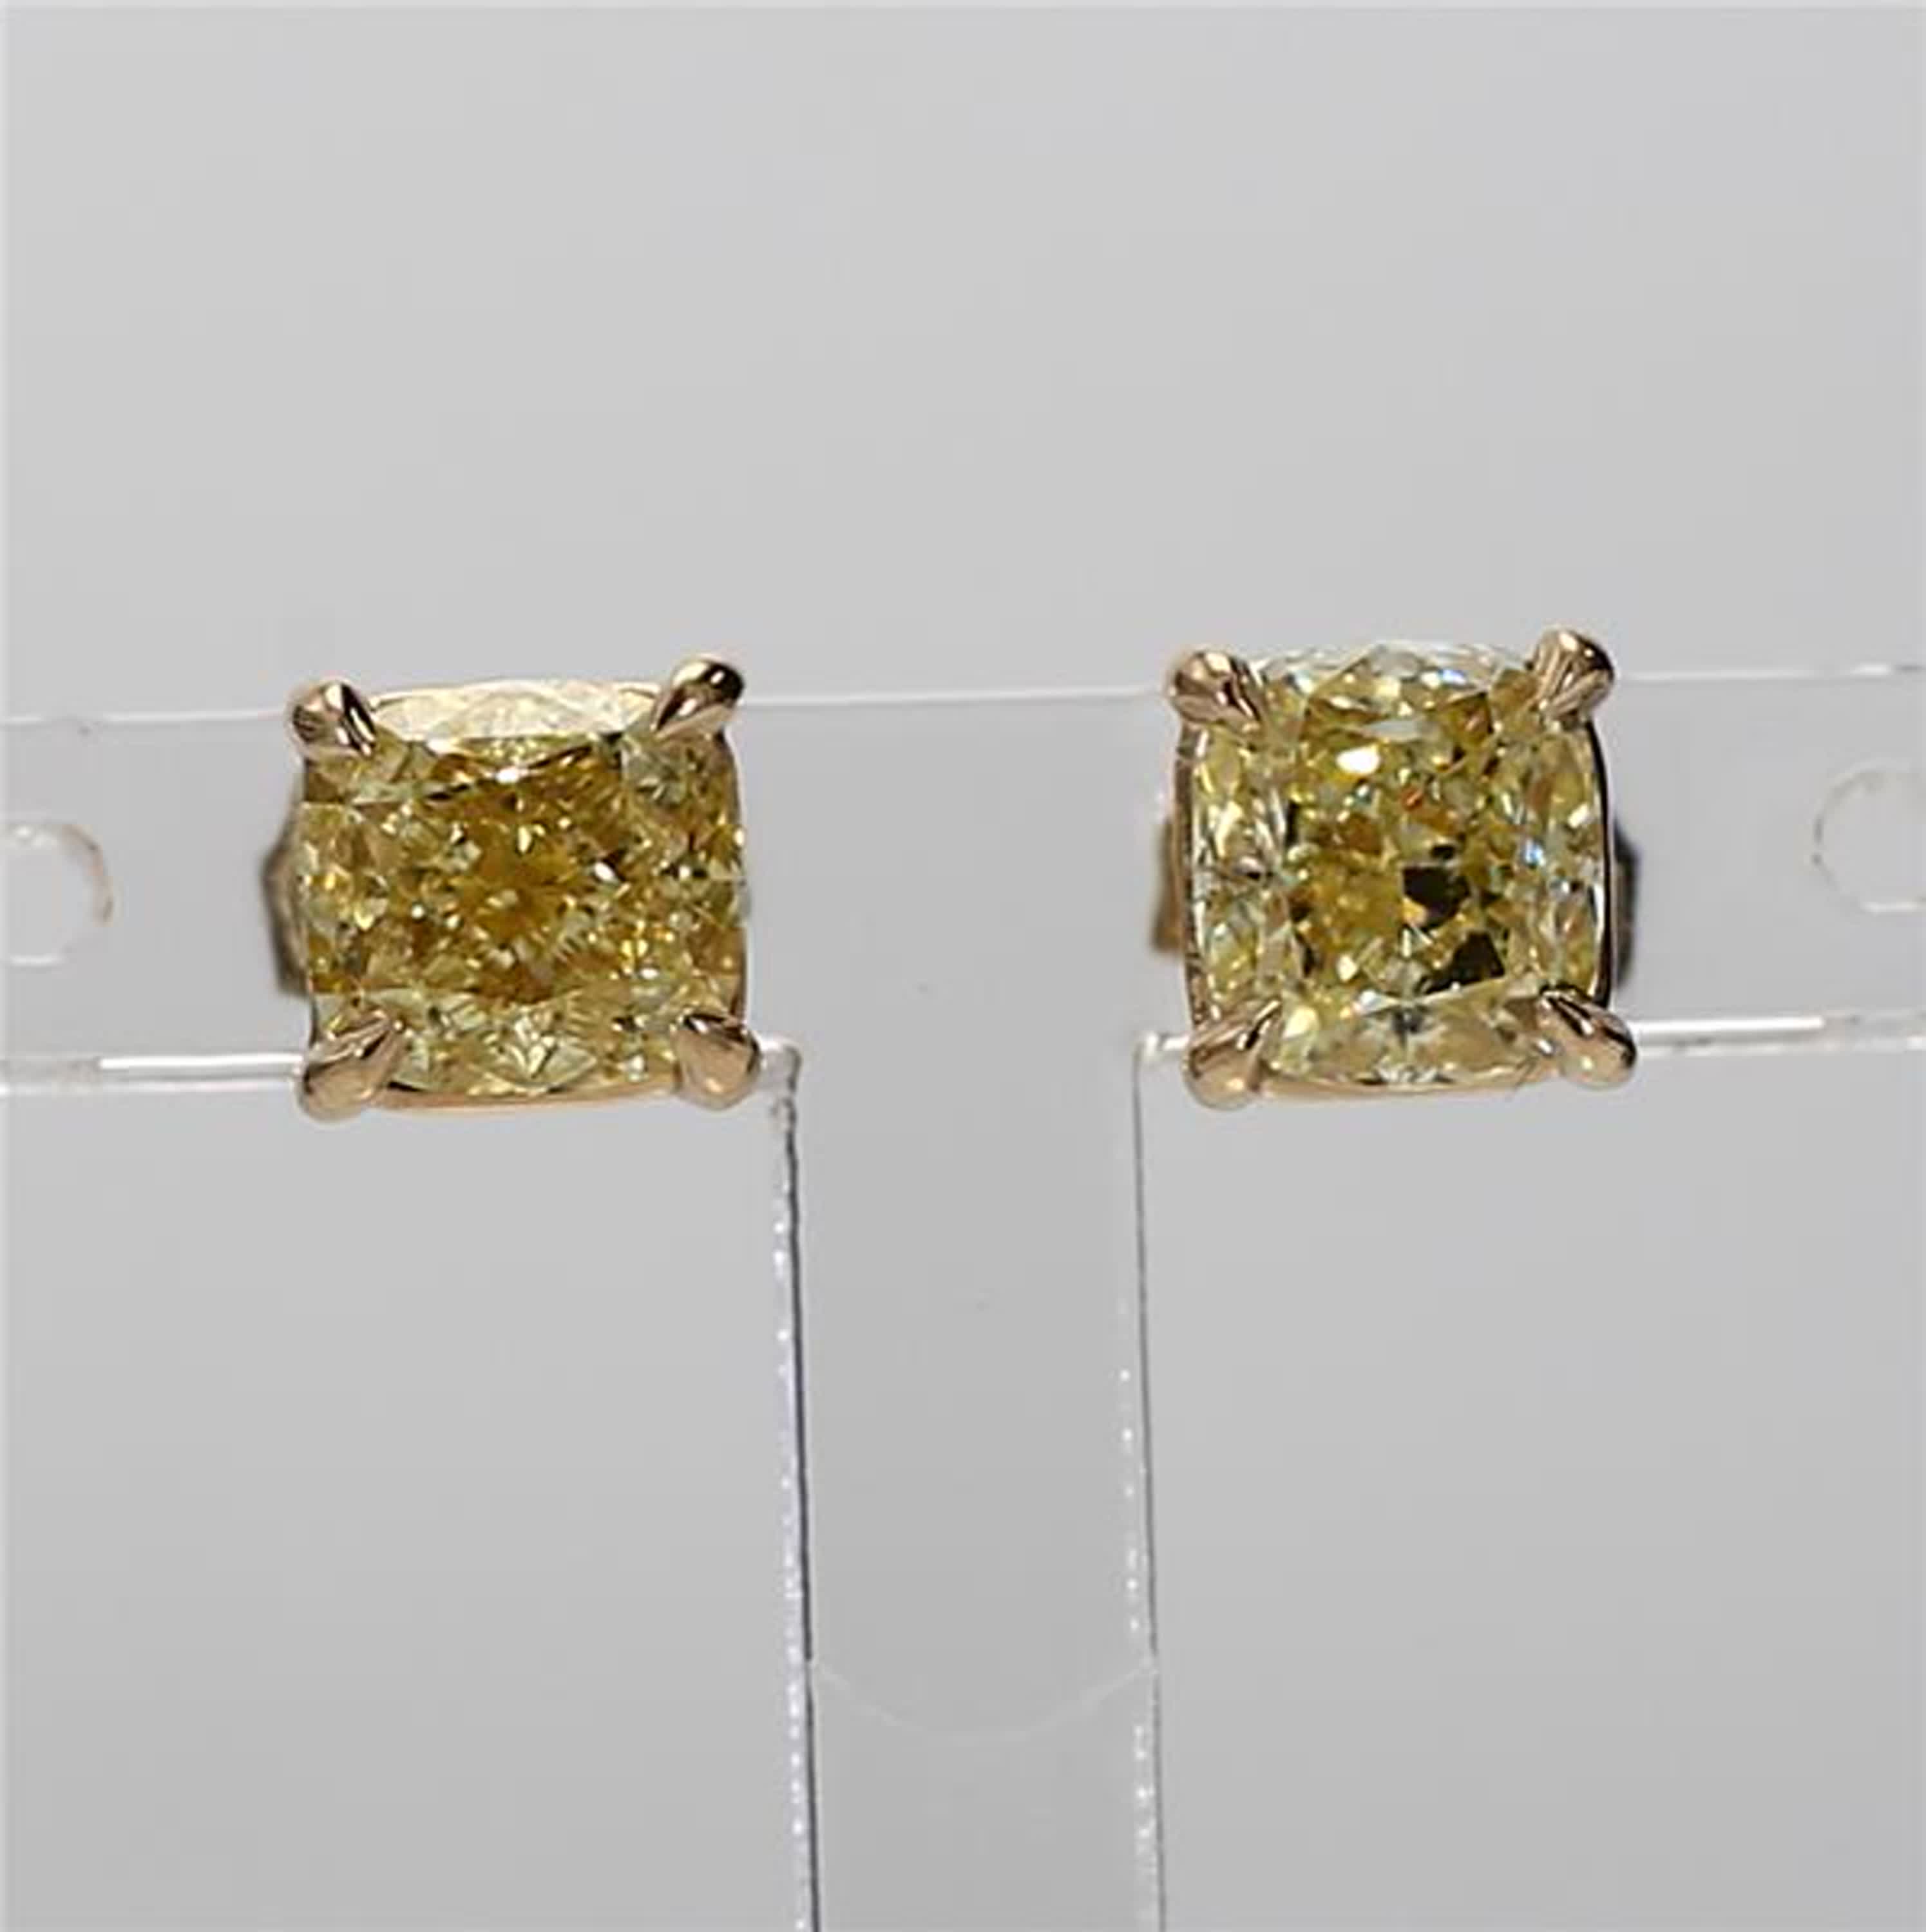 GIA Certified Natural Yellow Cushion Diamond 2.04 Carat TW Gold Stud Earrings